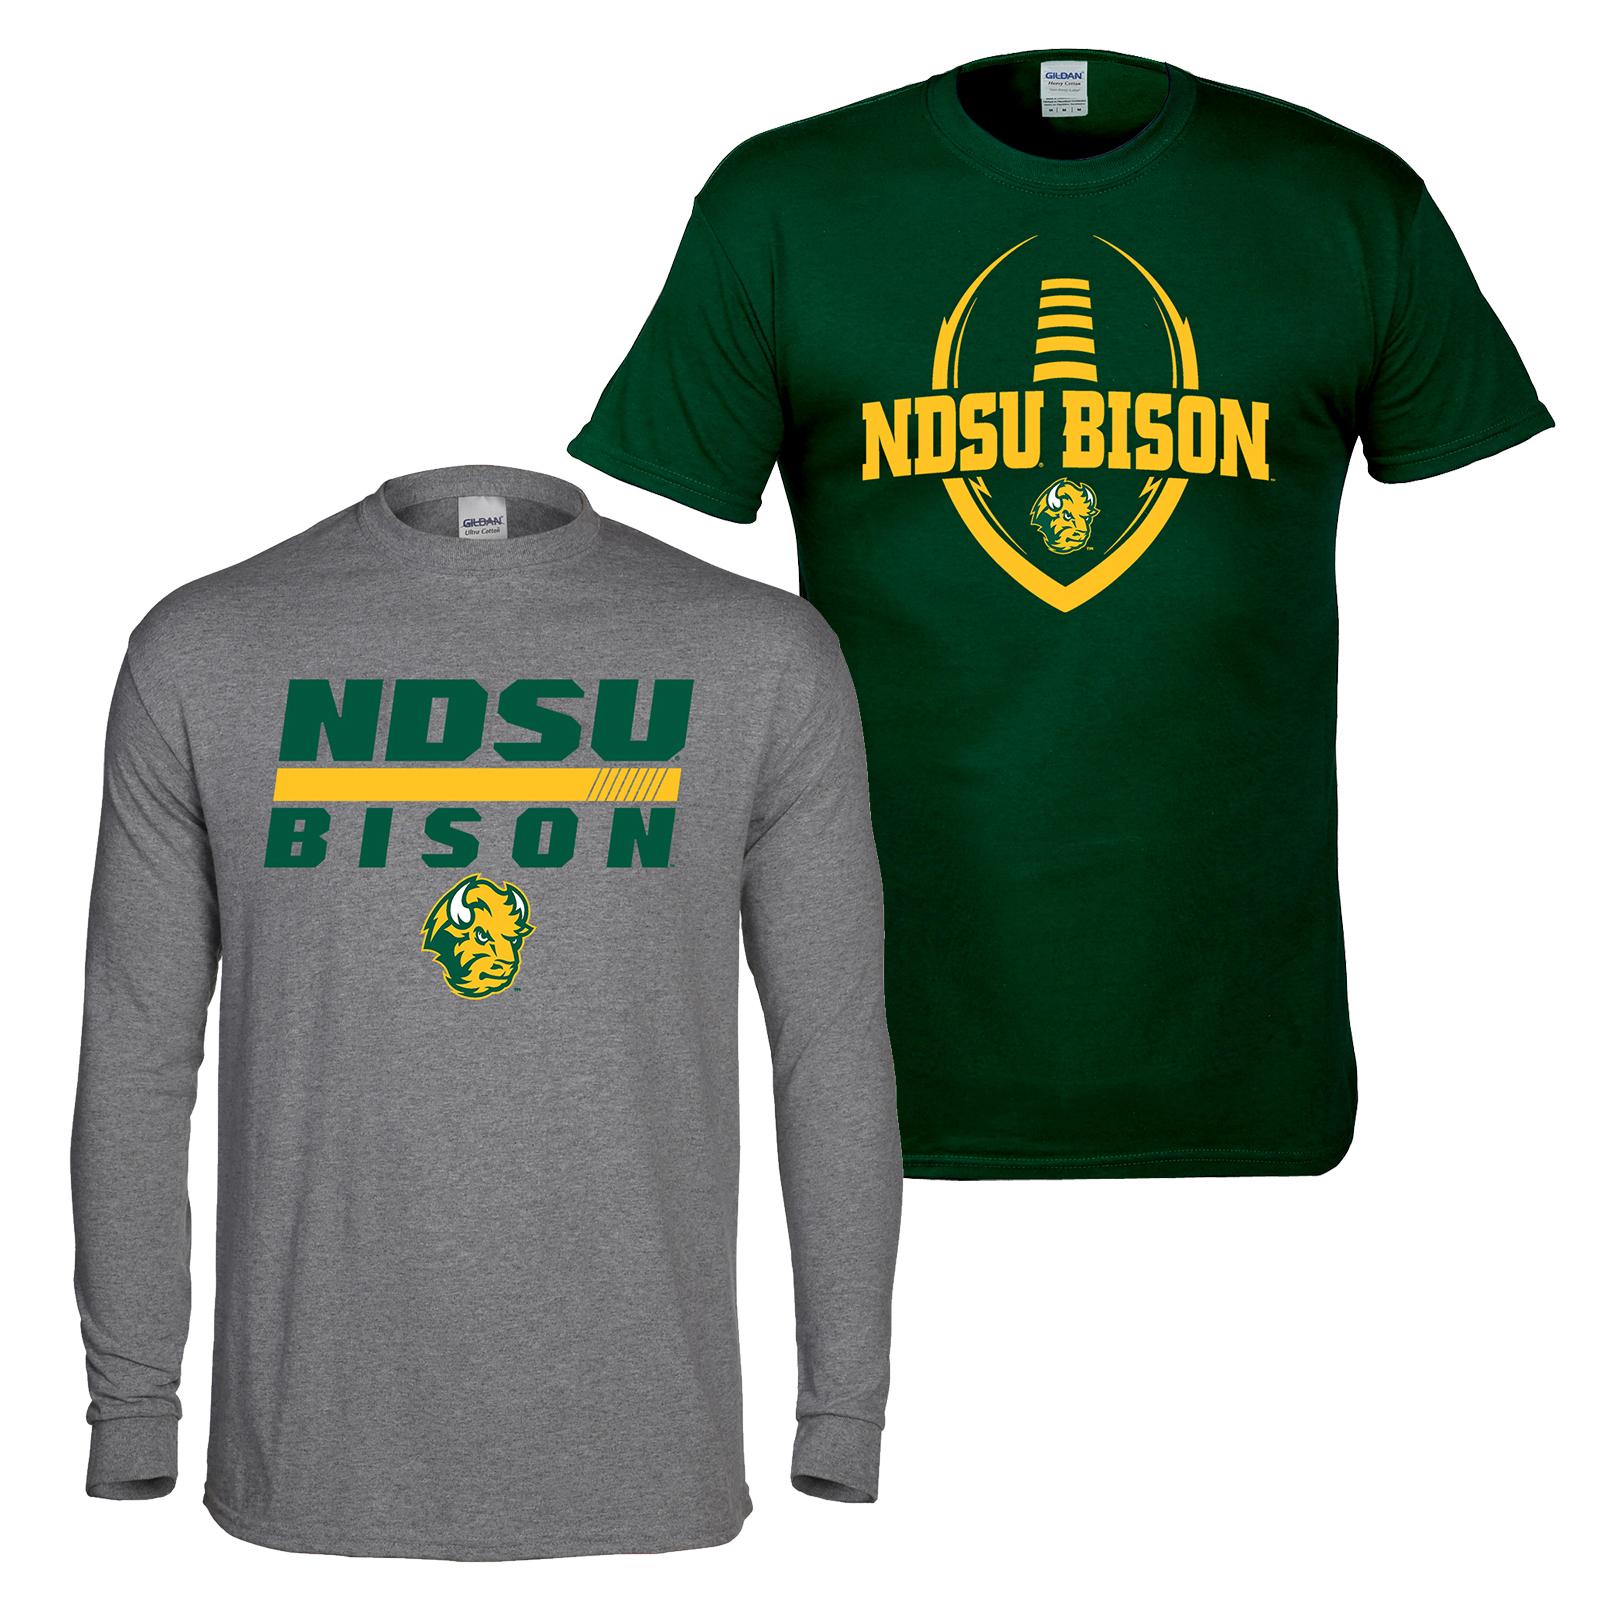 NCAA Boys' 2-Pack Graphic T-Shirts - North Dakota State Bison